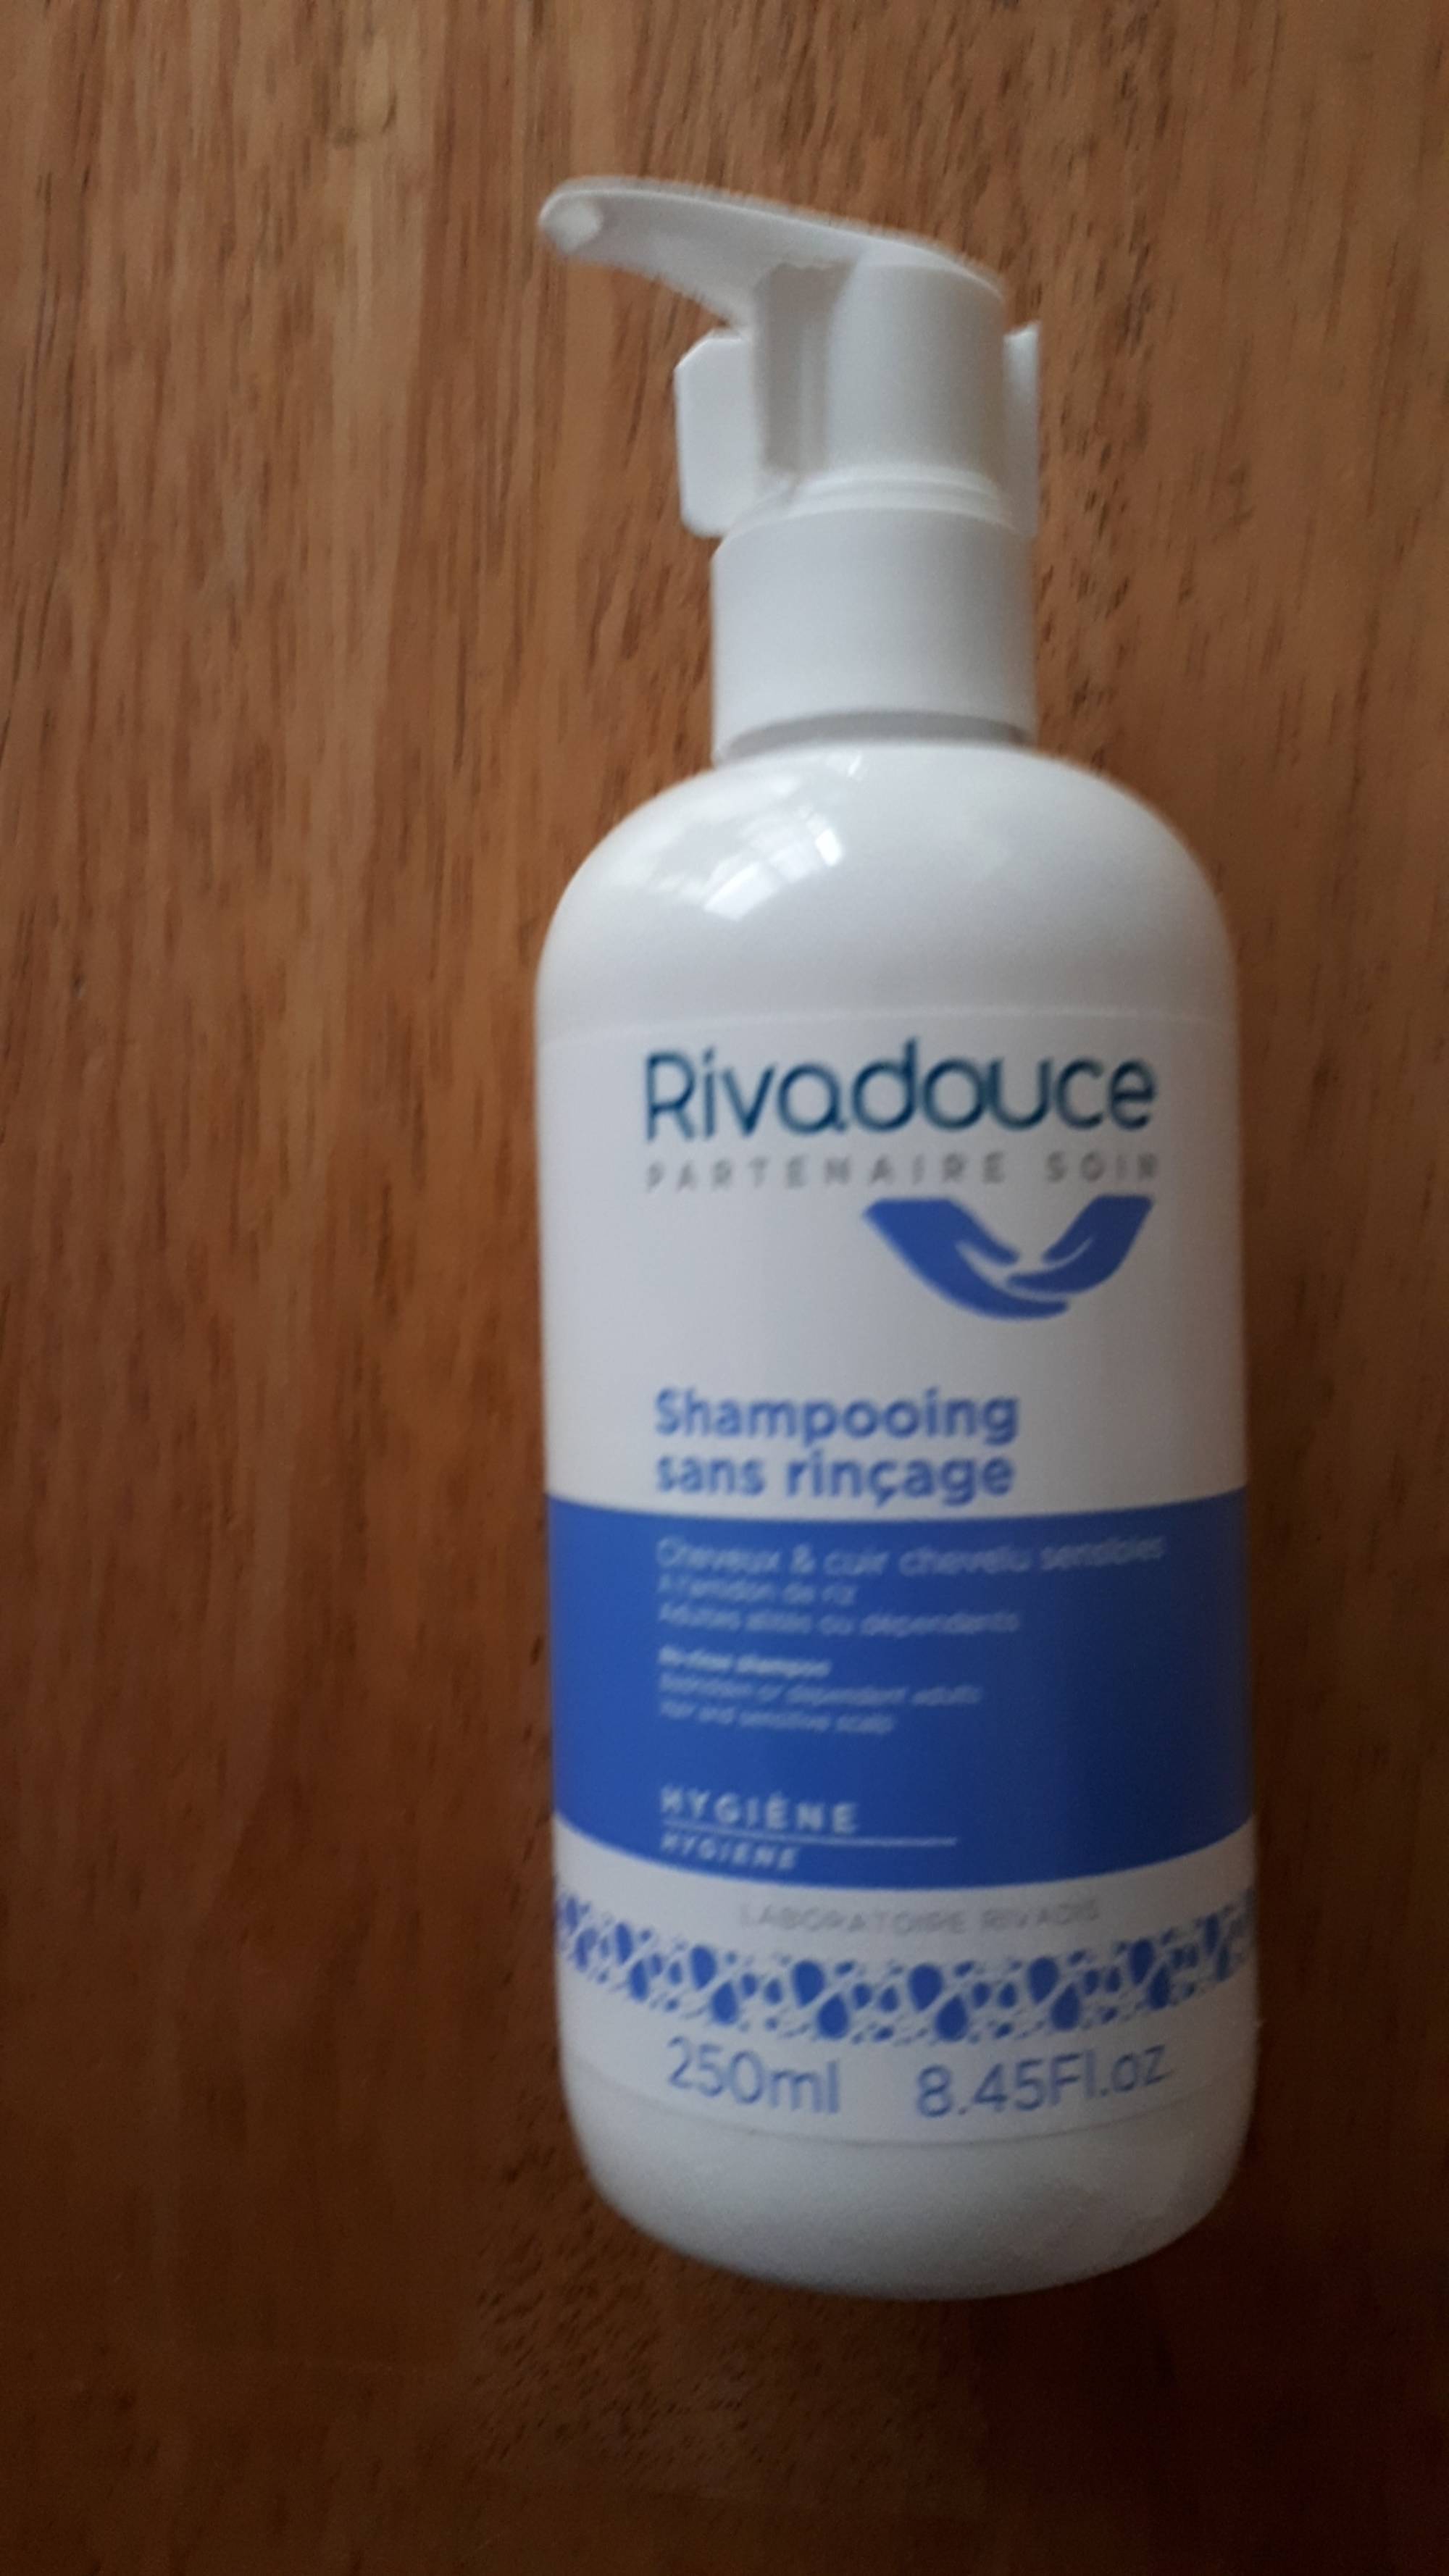 RIVADOUCE - Shampooing sans rinçage